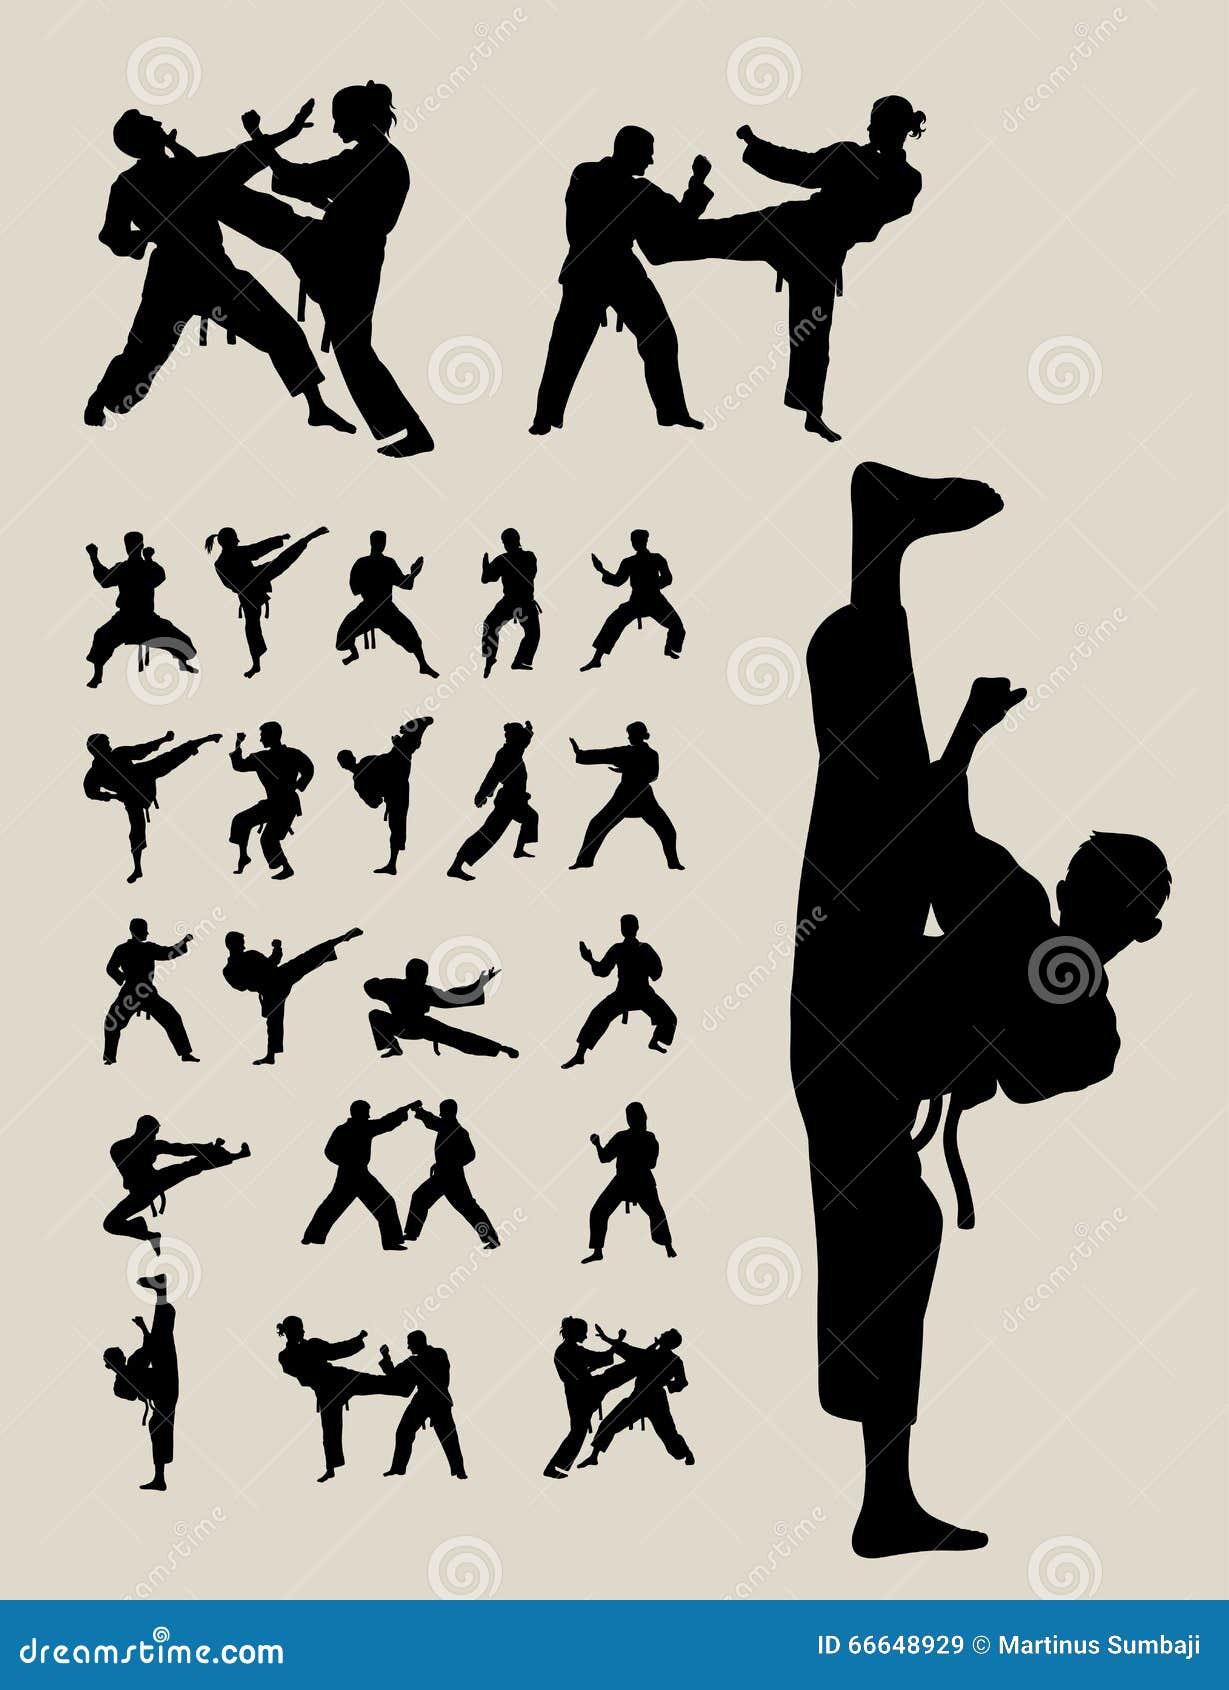 taekwondo and karate silhouettes